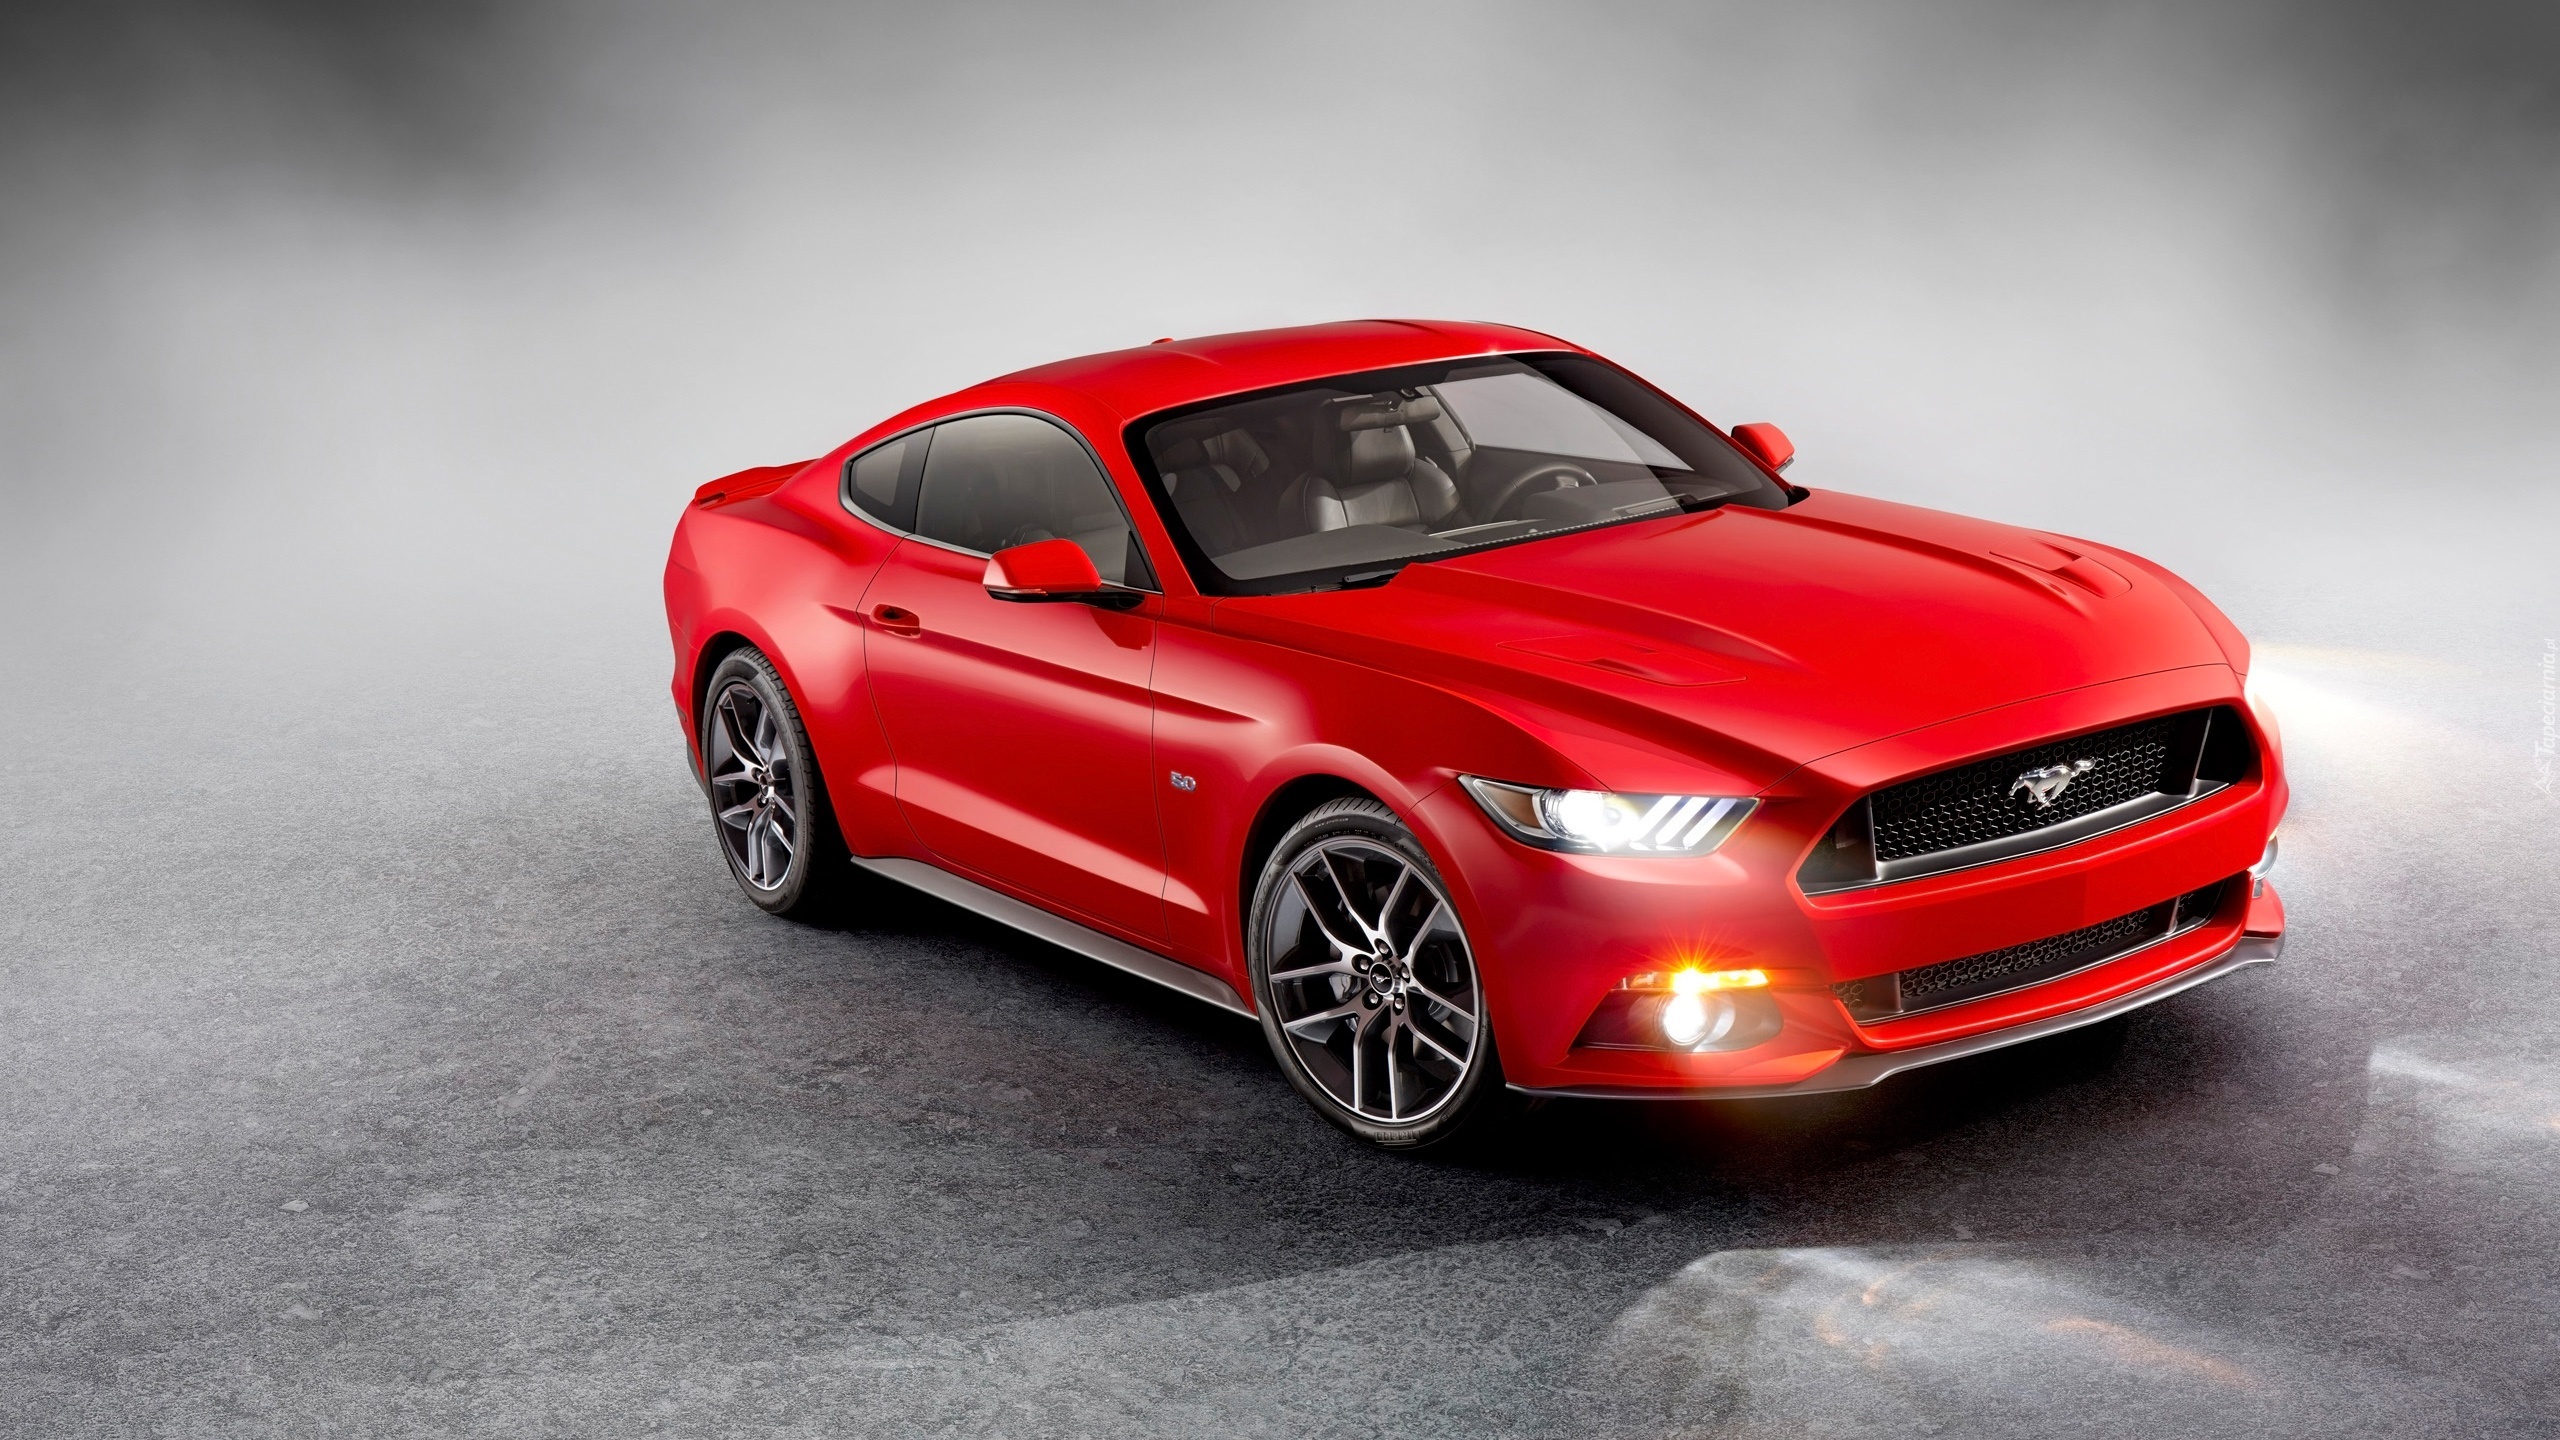 Ford, Mustang, Czerwony, 2015